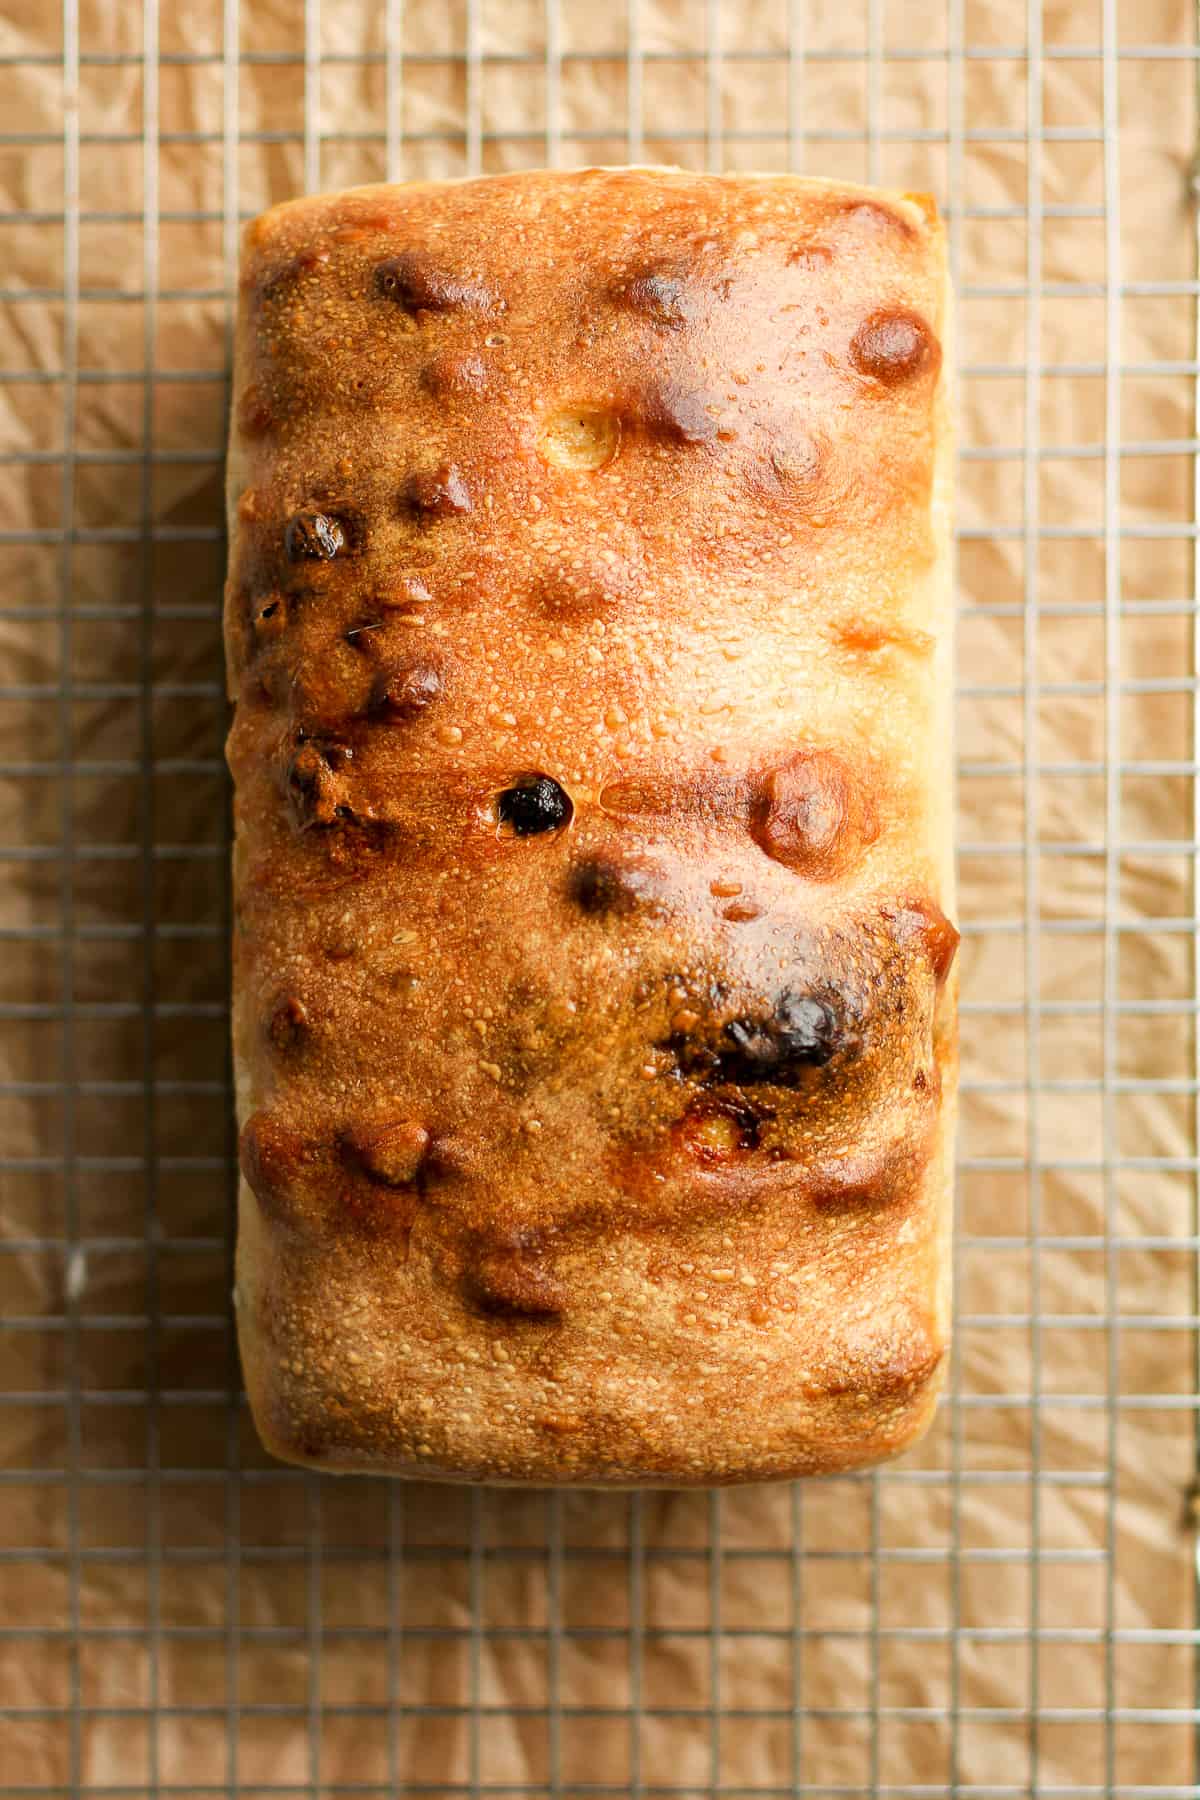 A loaf of the baked cinnamon raisin sourdough bread.